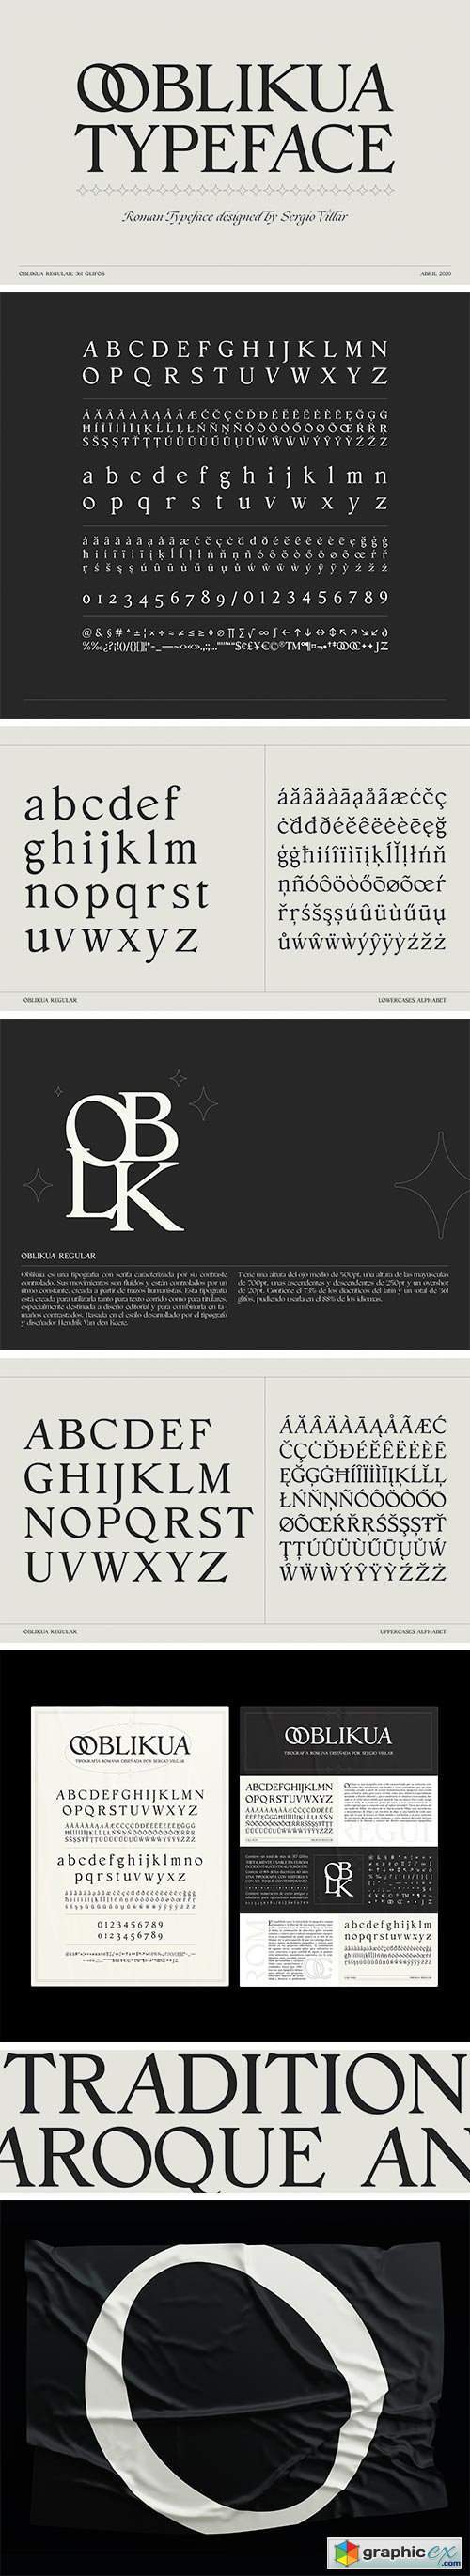 Oblikua Typeface